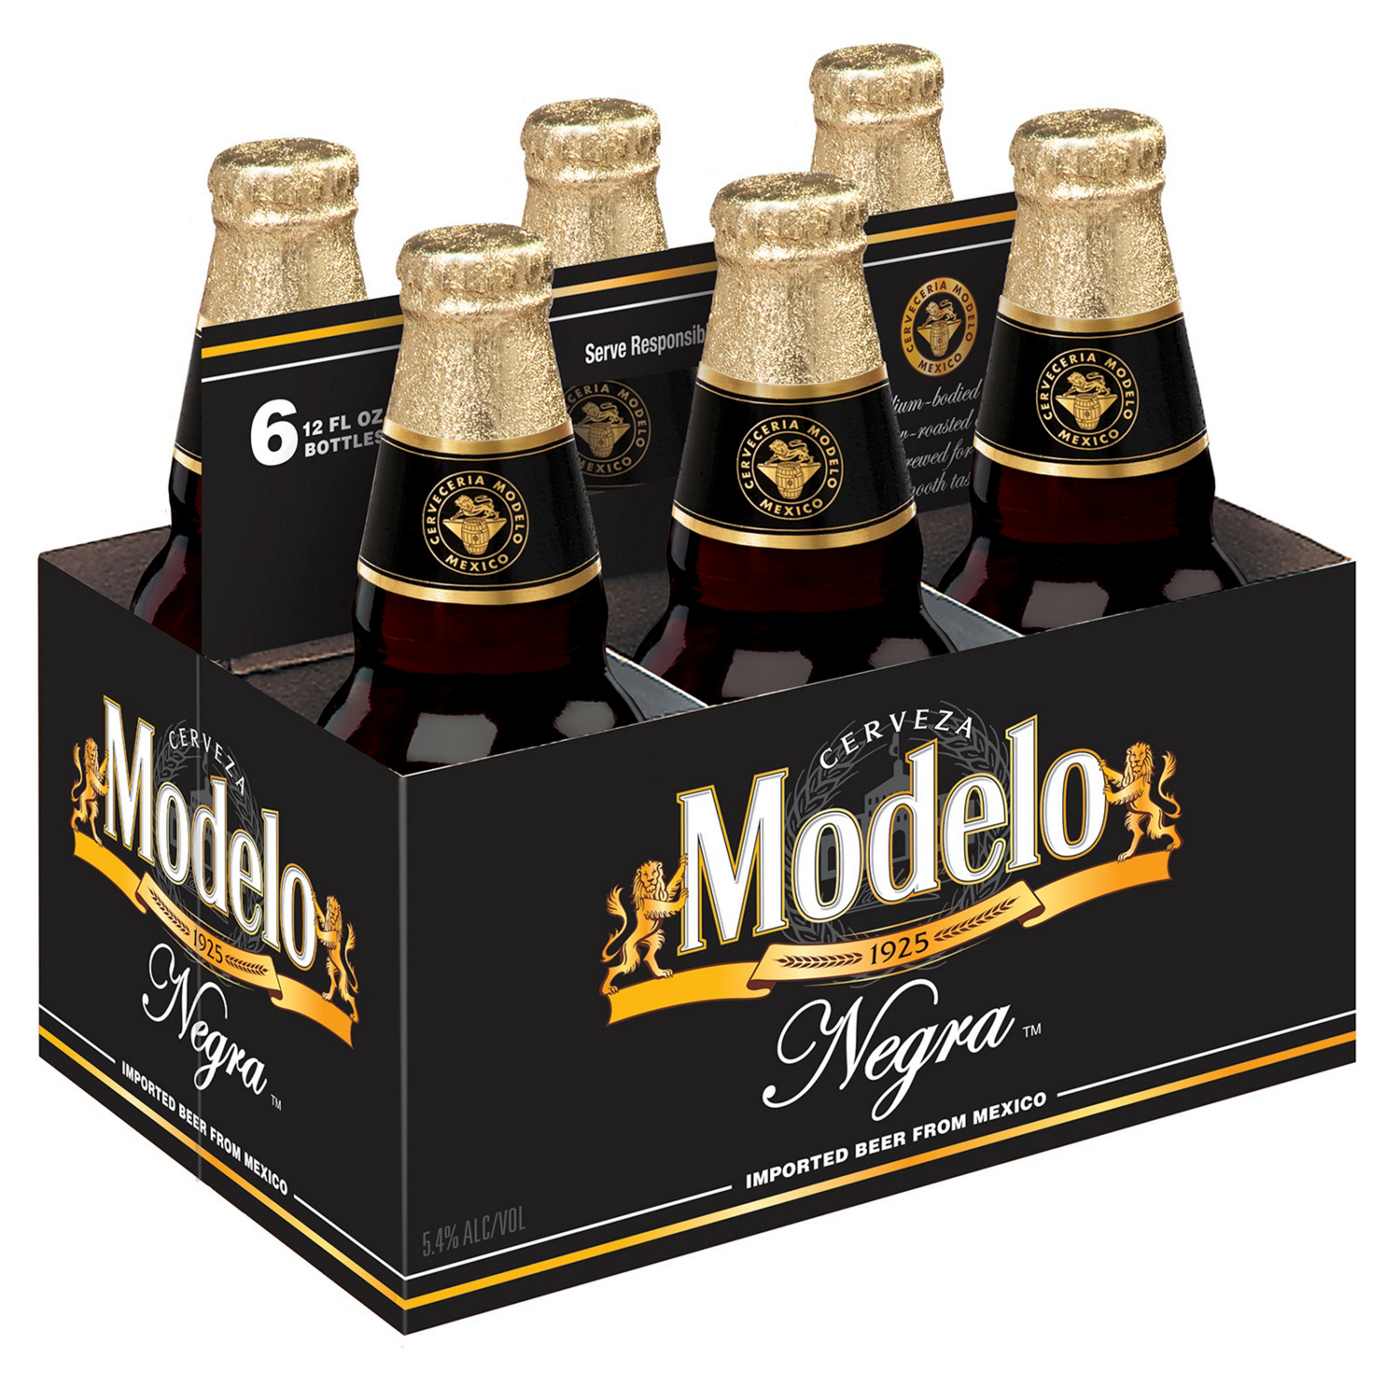 Modelo Negra Mexican Amber Lager Beer 12 oz Bottles - Shop Beer at H-E-B